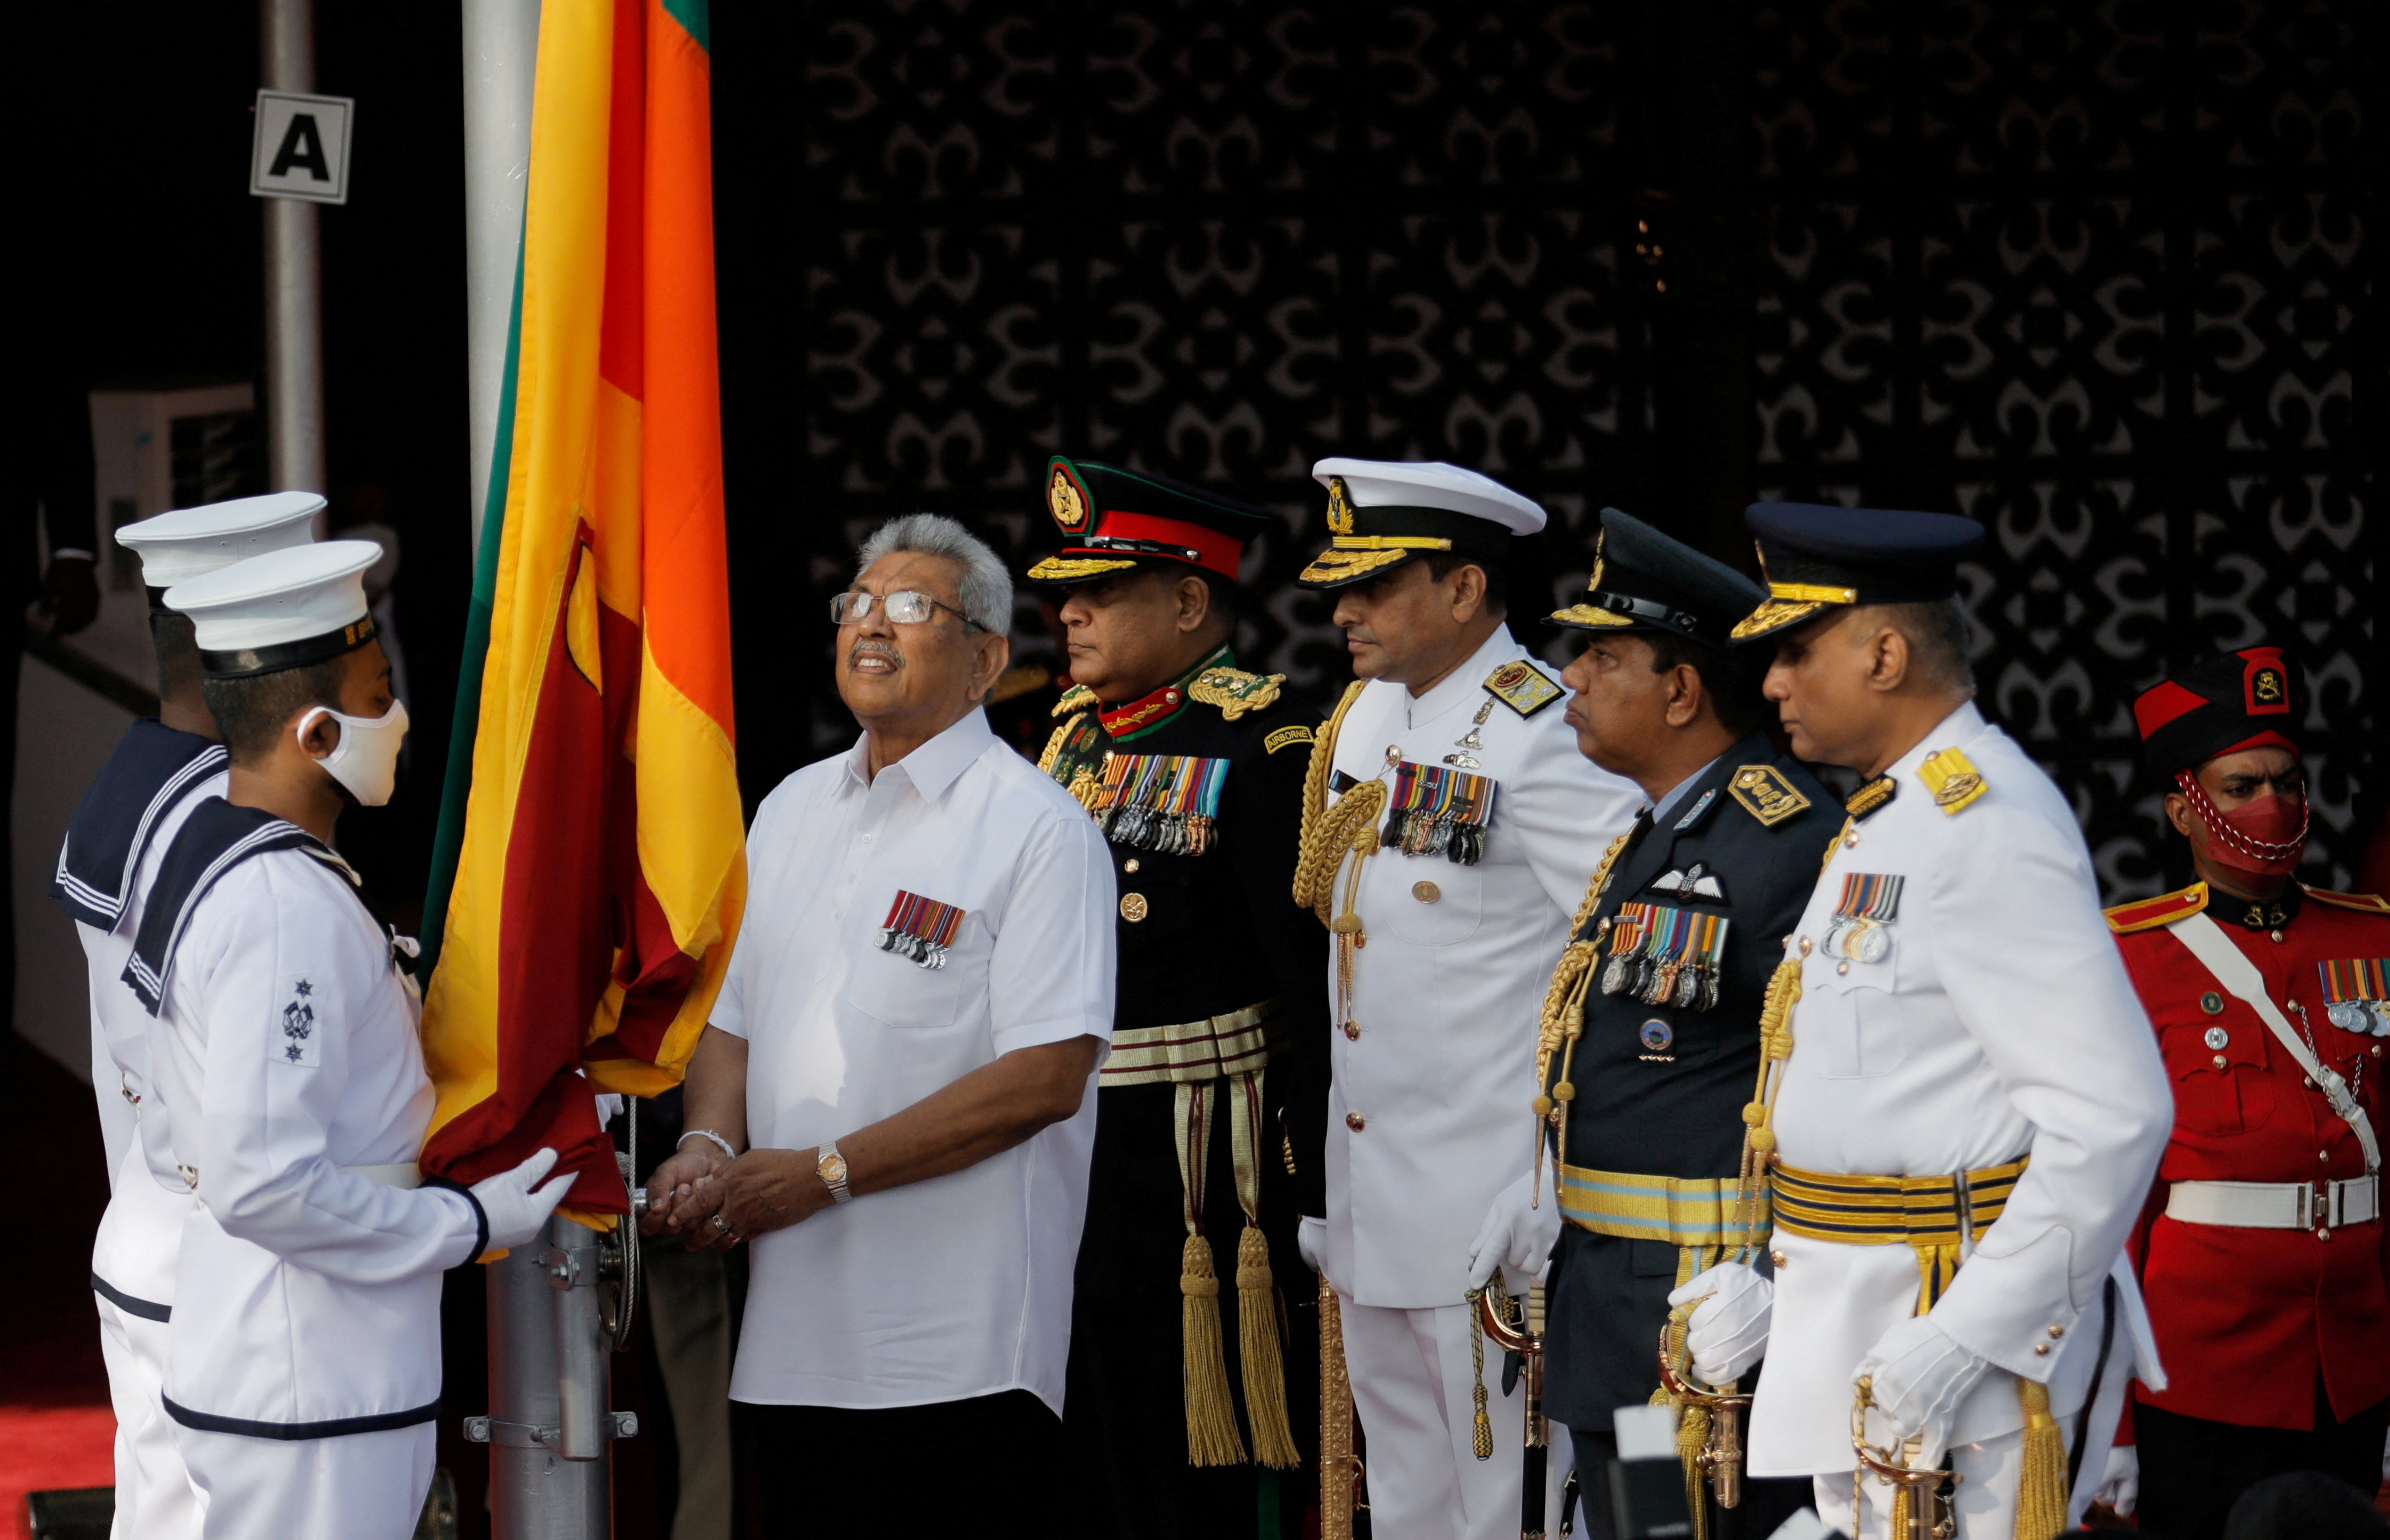 Sri Lanka celebrates 74th Independence Day